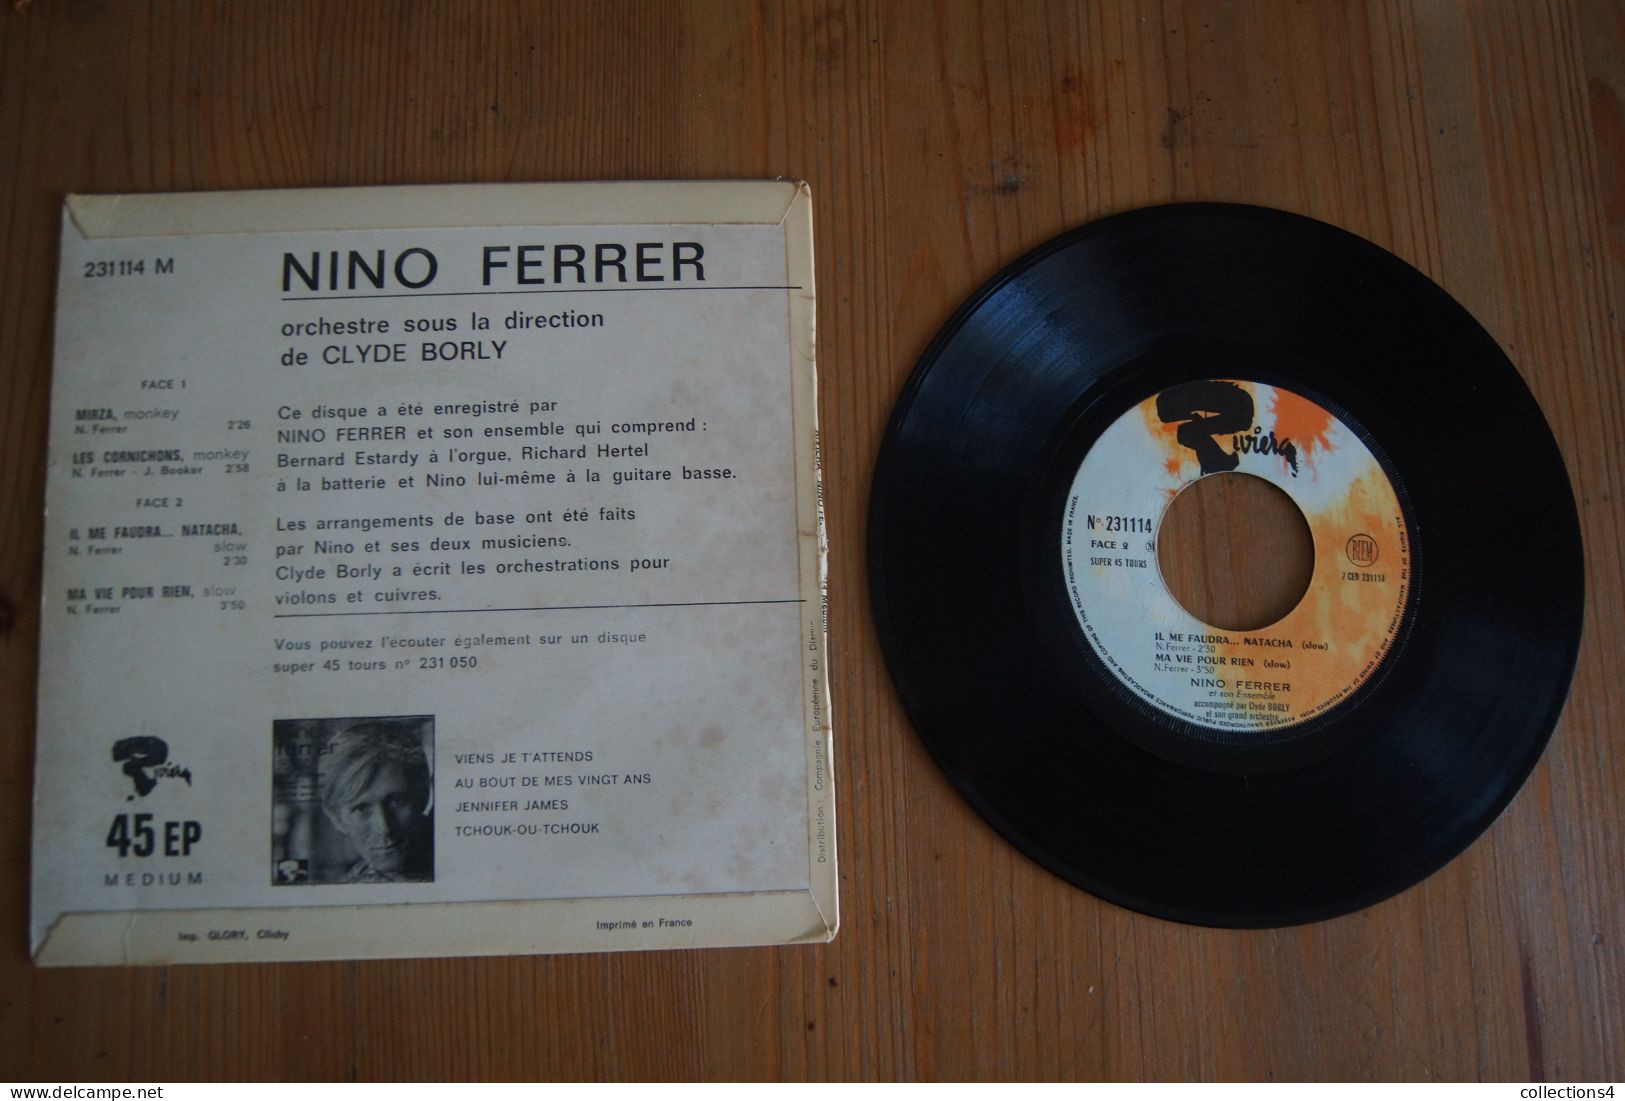 NINO FERRER Z AVEZ PAS VU MIRZA EP 1965 LANGUETTE - 45 G - Maxi-Single